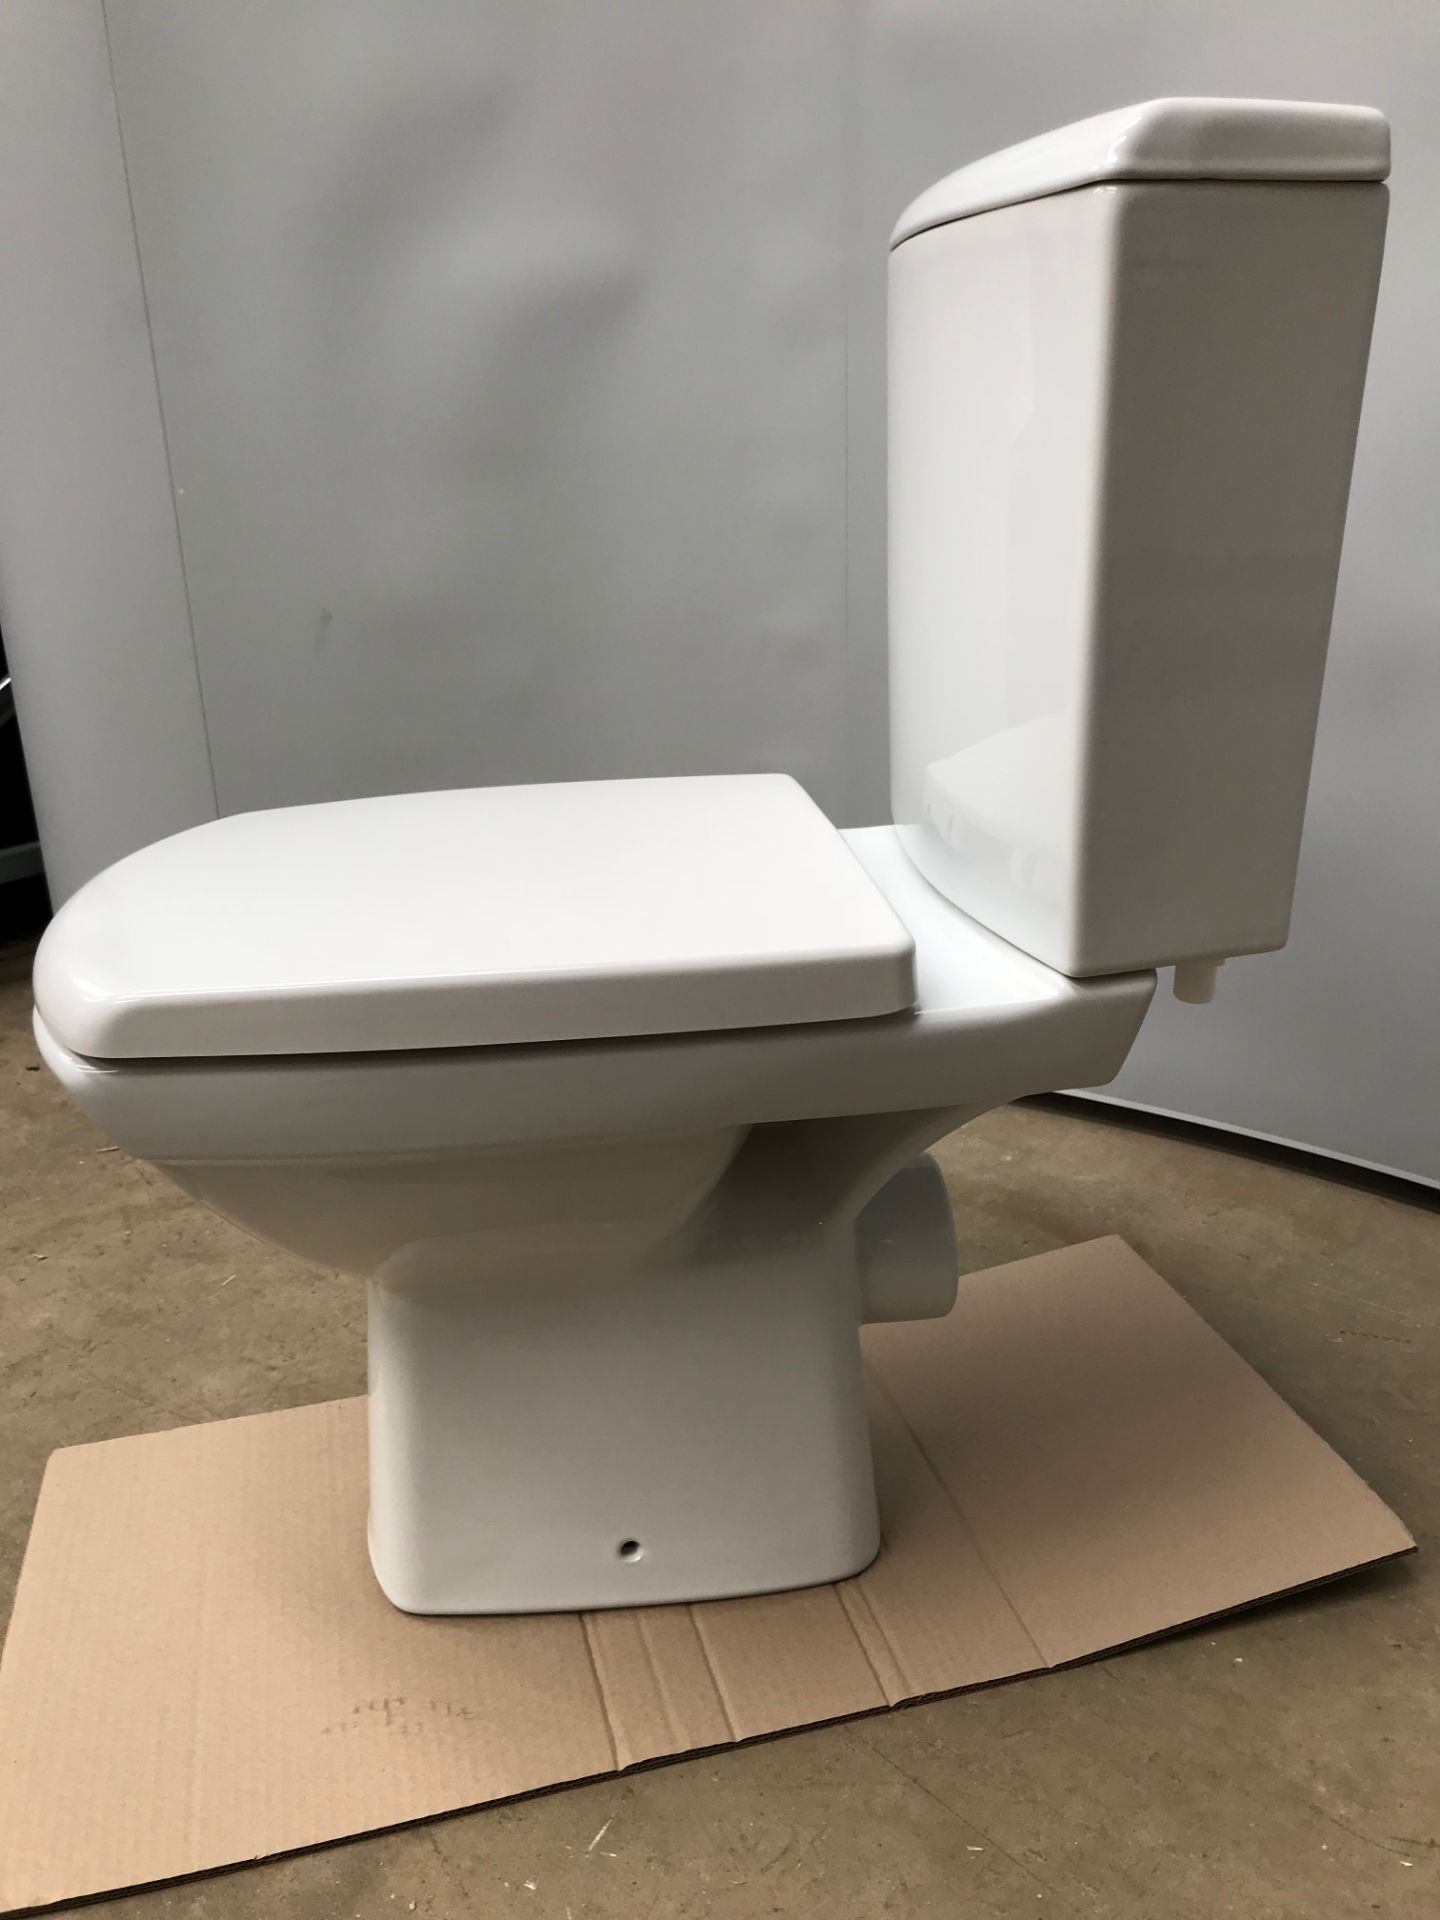 6 x Navassa Close Coupled Toilet with Soft Closure - Bild 4 aus 8